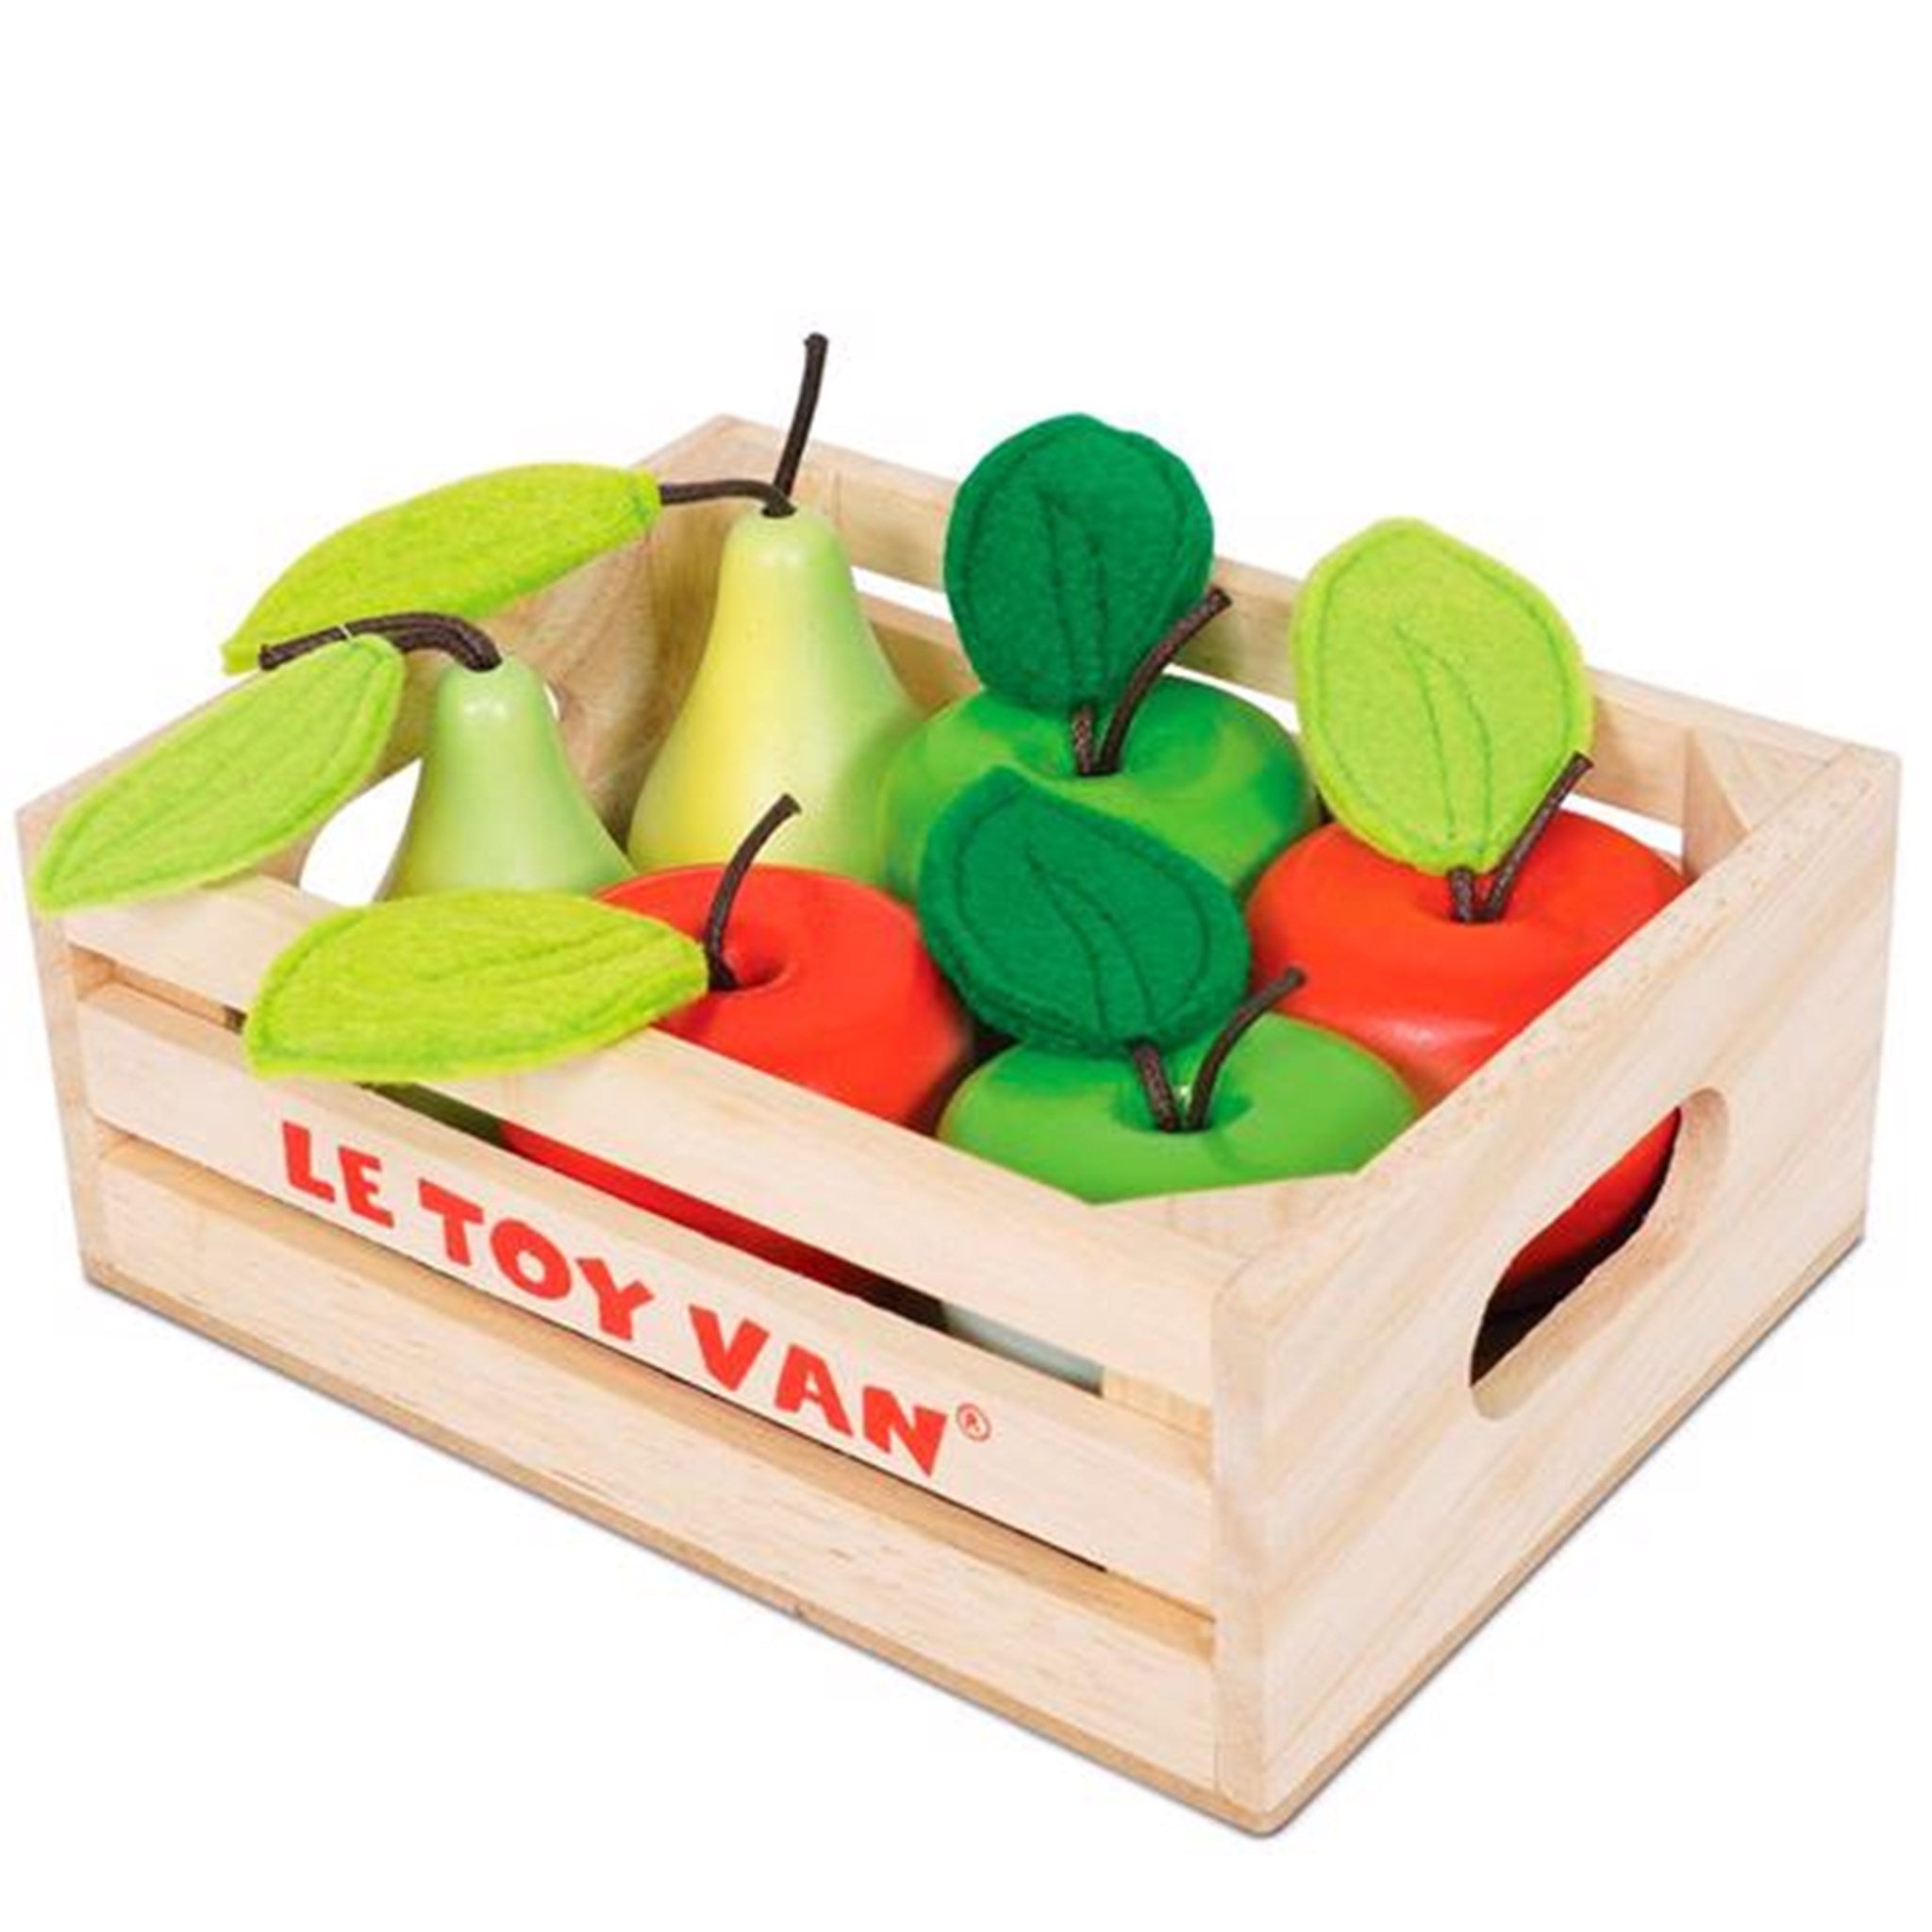 Le Toy Van Honeybake Apples and Pears